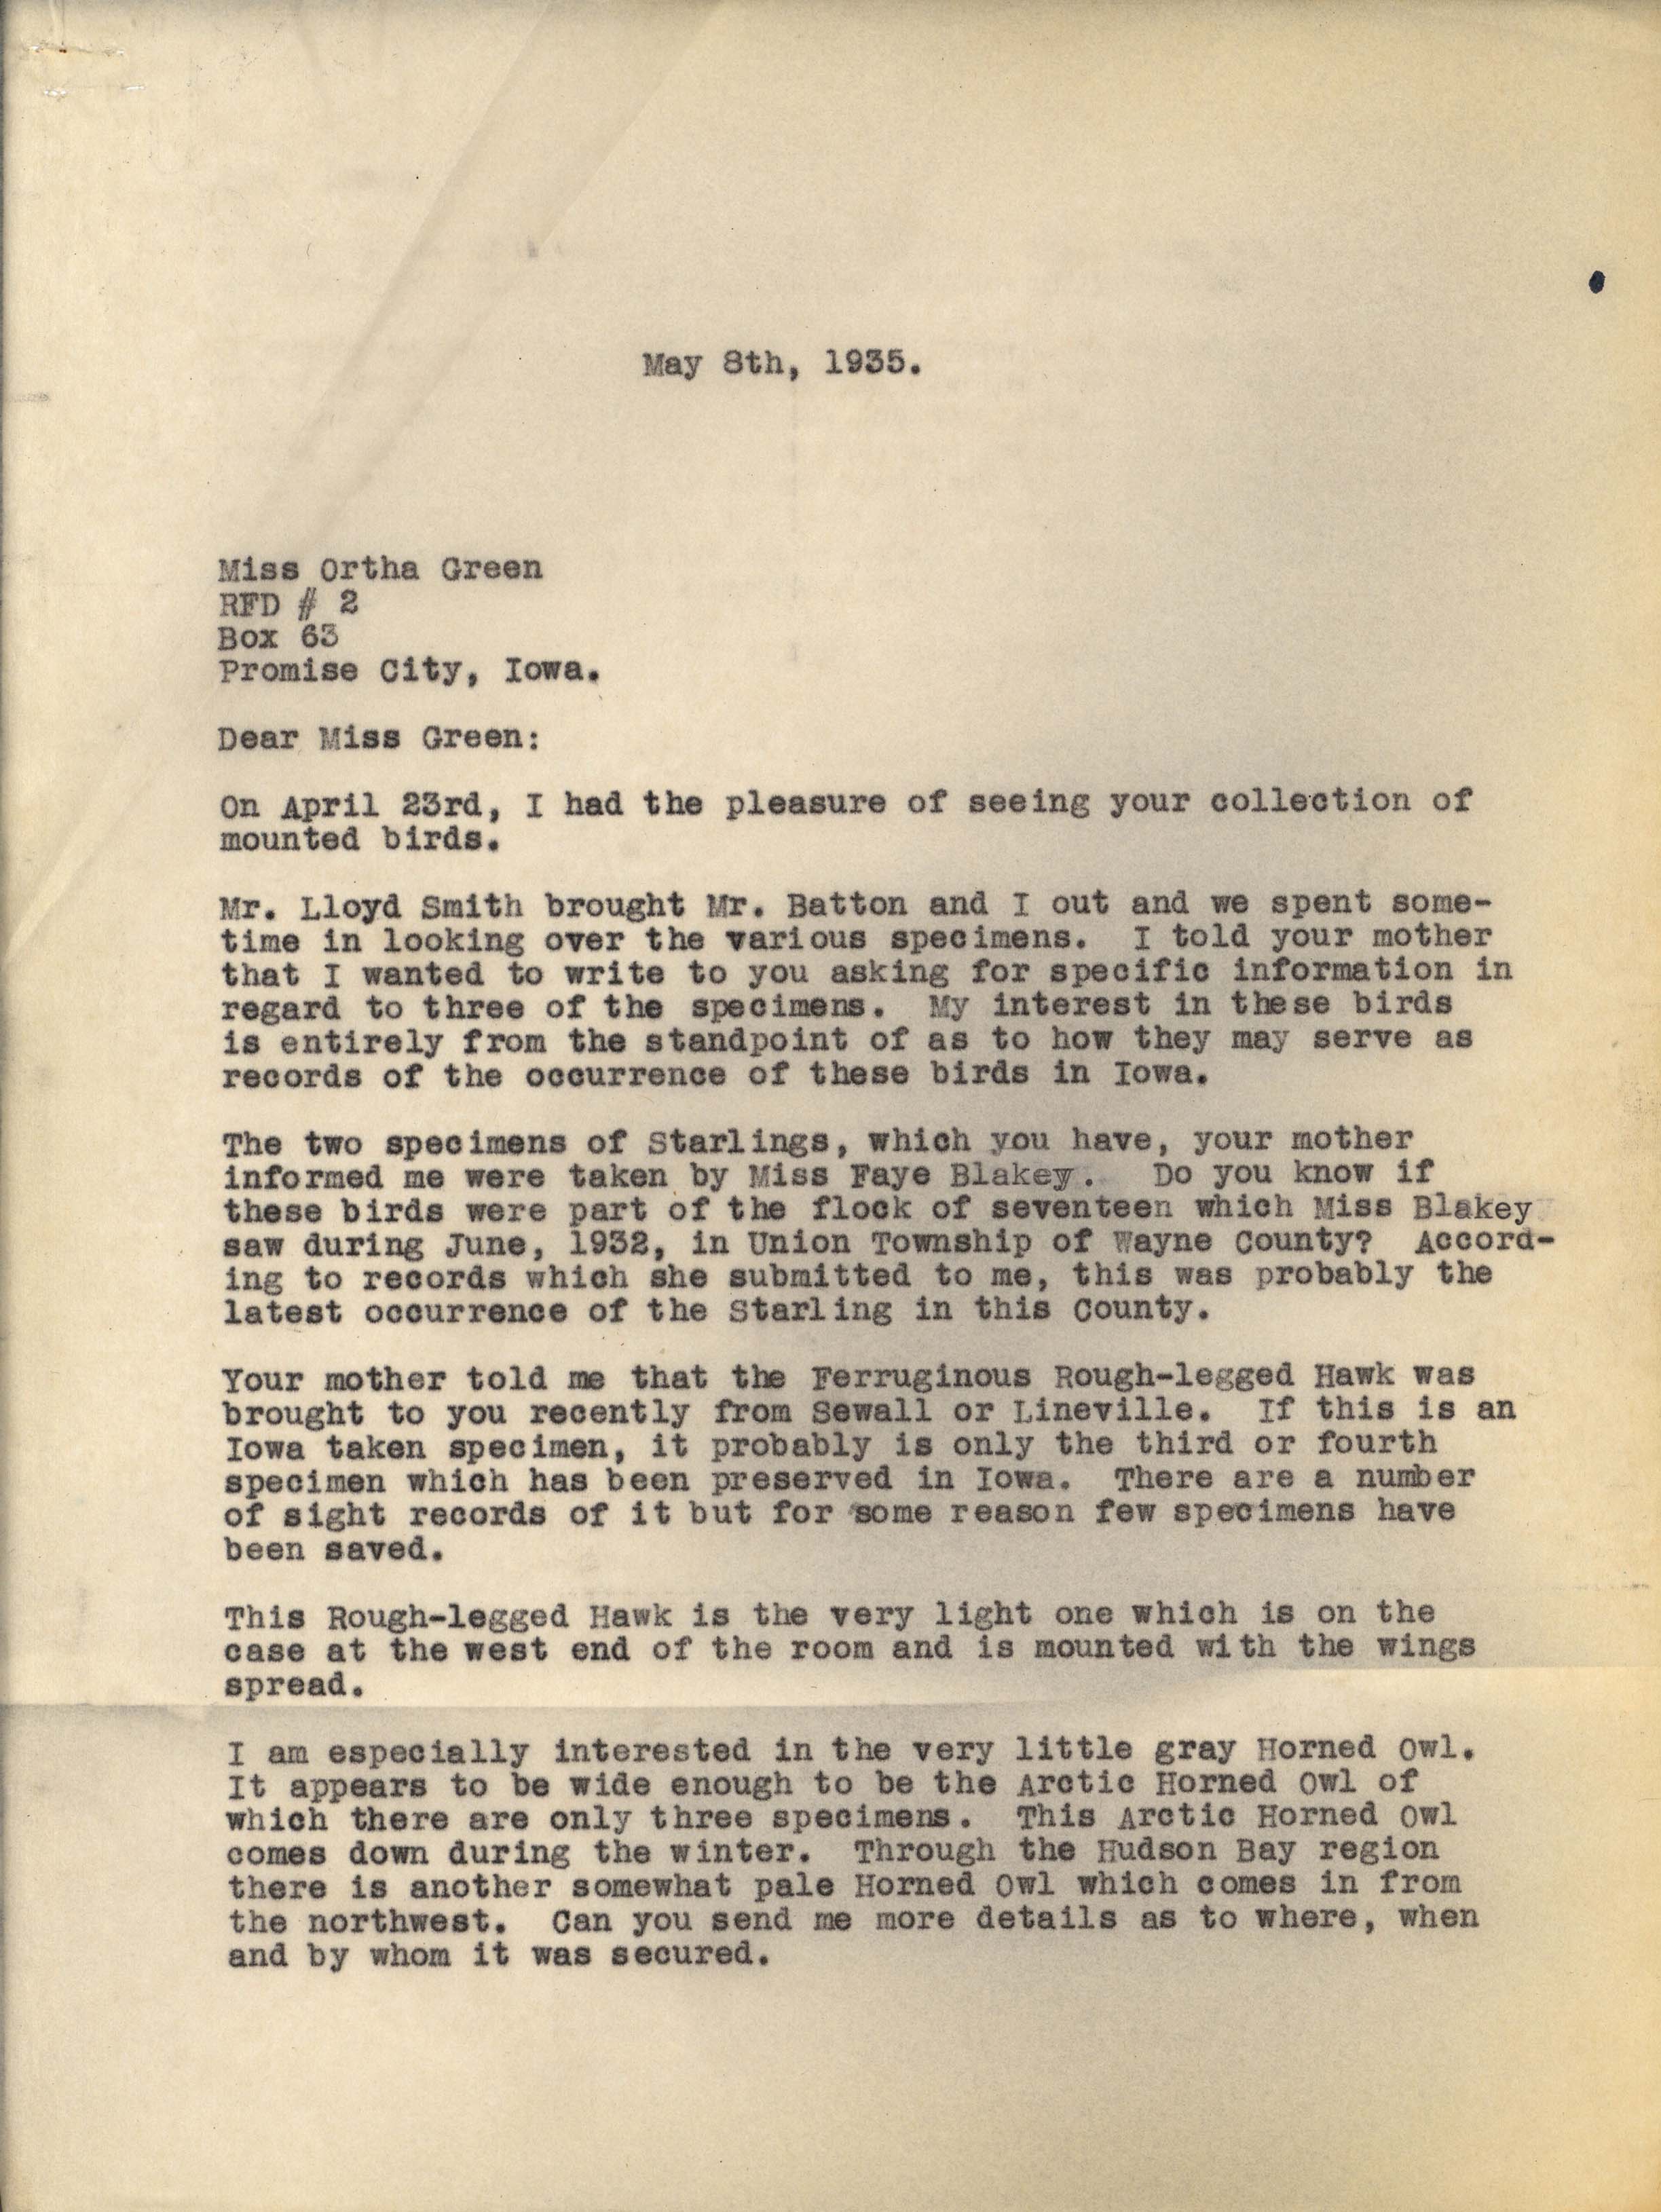 Philip DuMont letter to Ortha Green regarding bird specimens, May 8, 1935